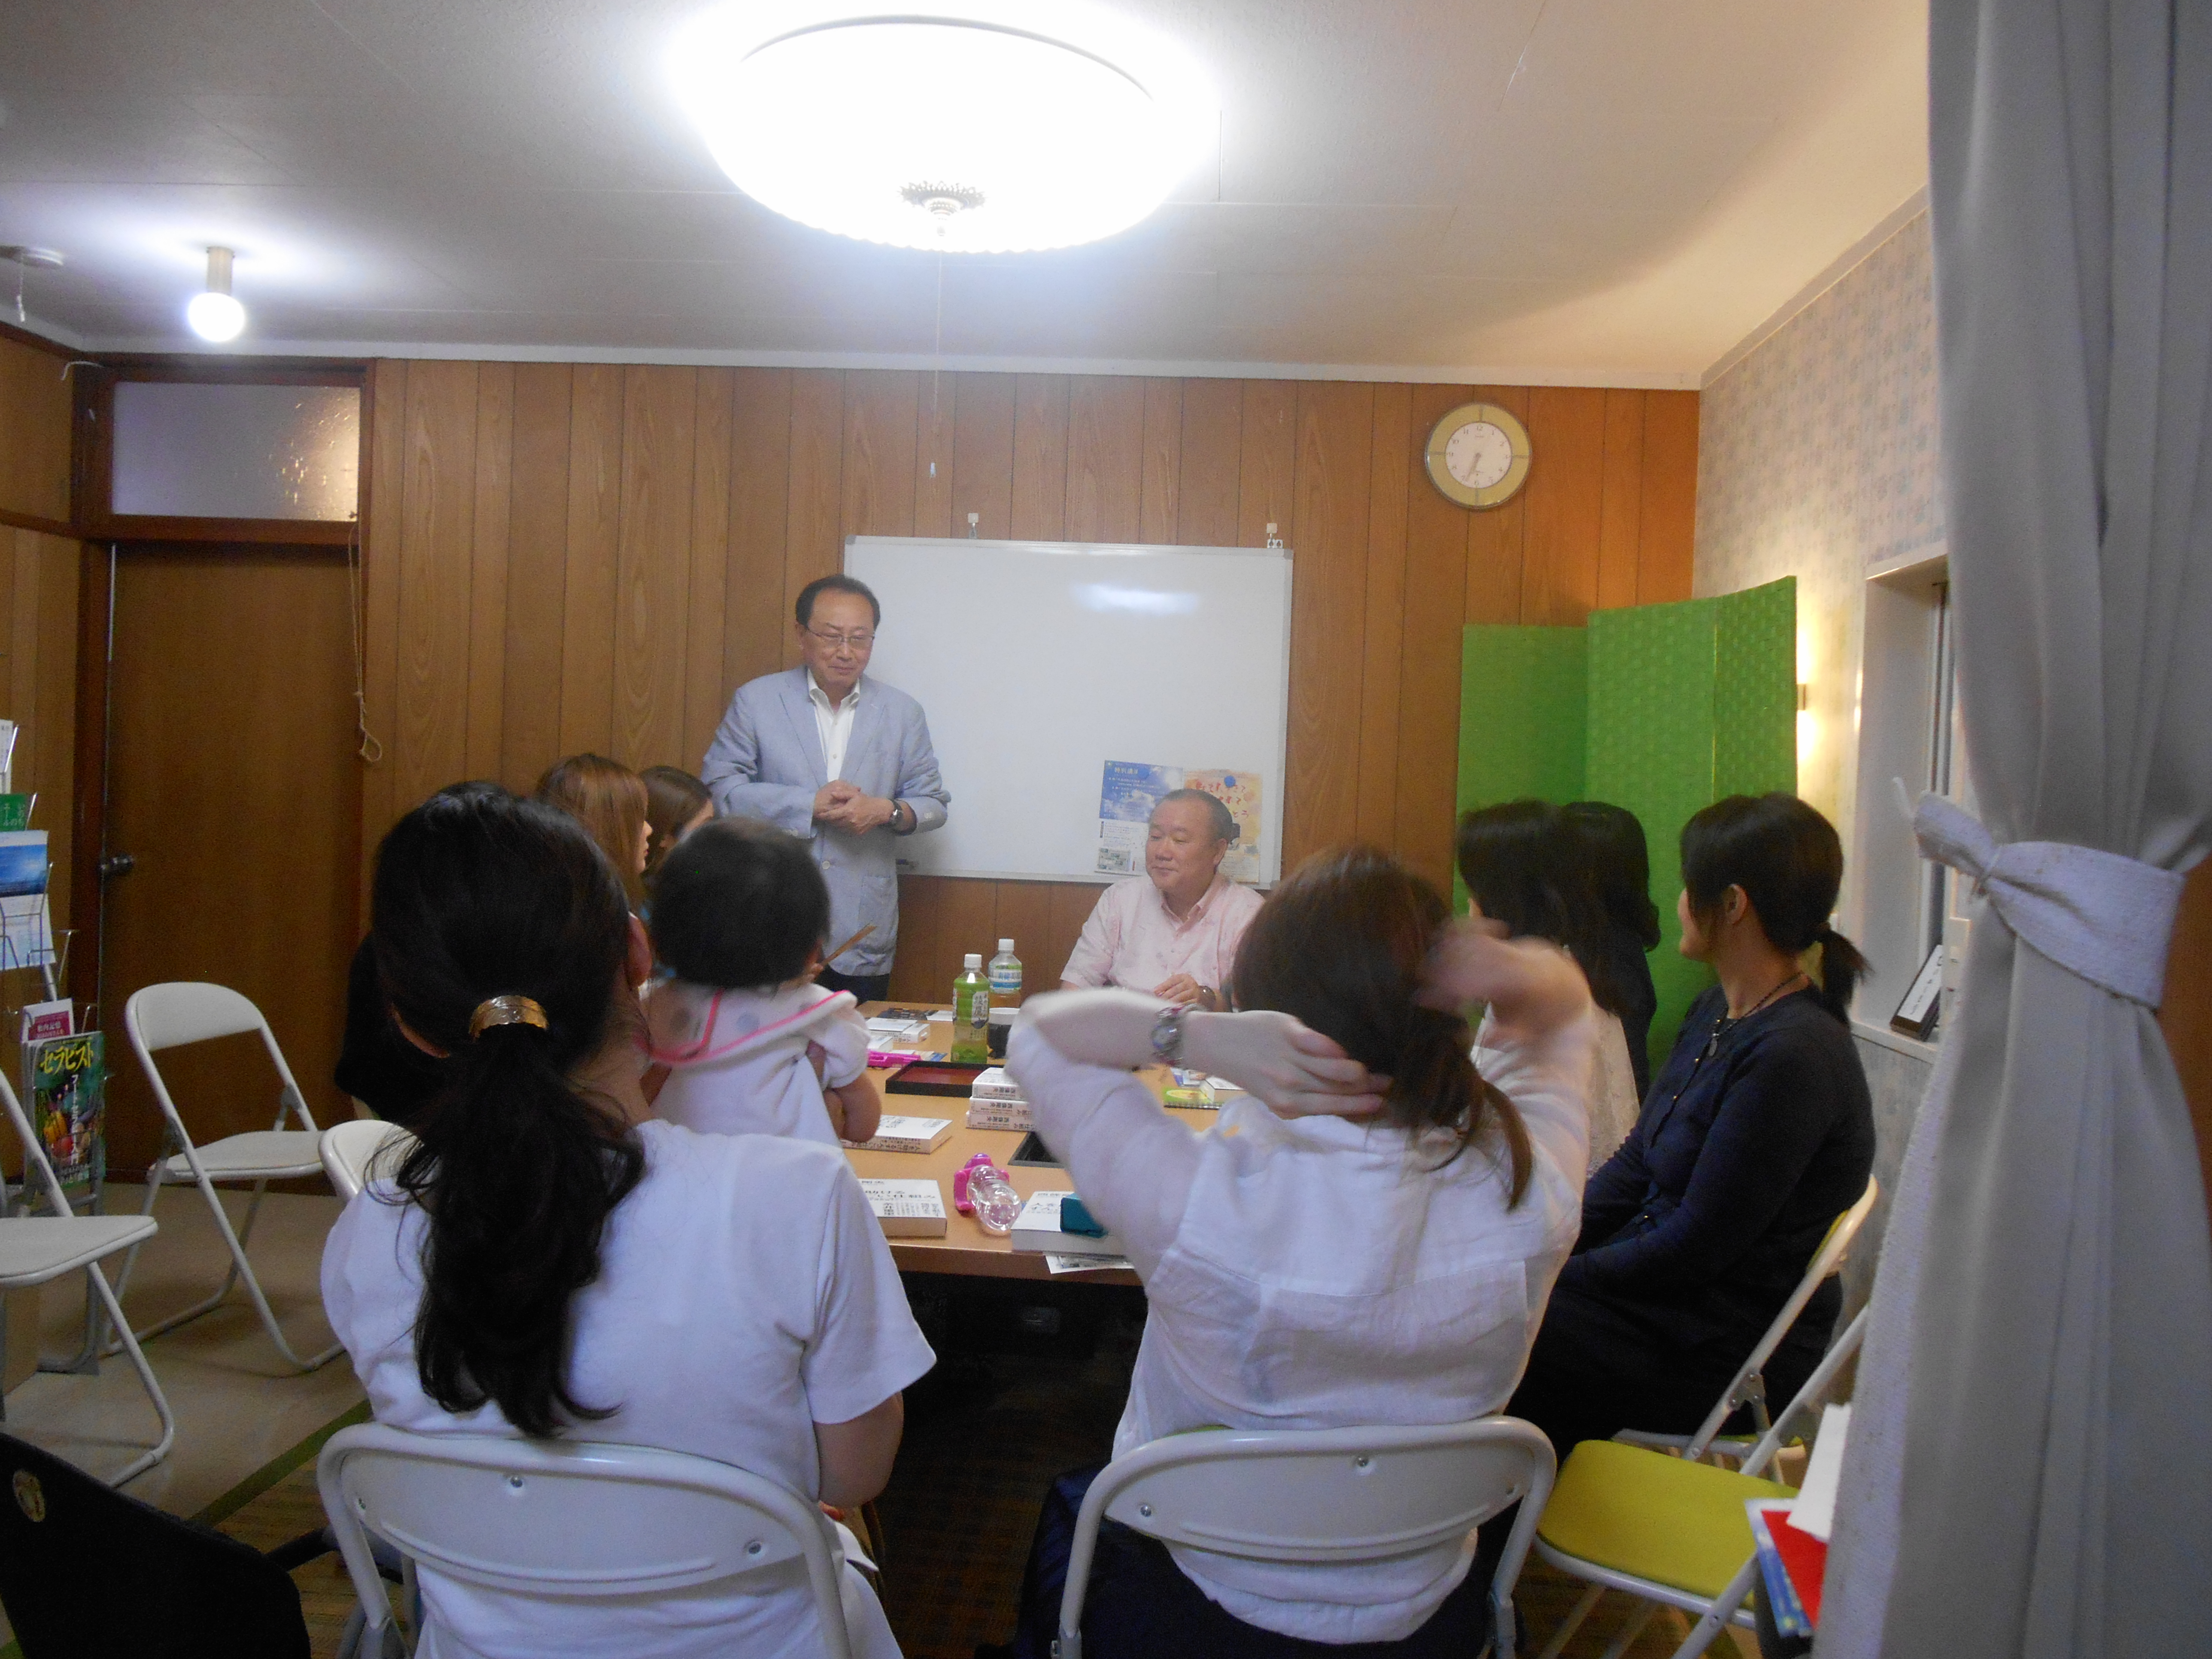 DSCN1640 - 2019年7月16日愛の子育て塾第15期第2講座開催しました。